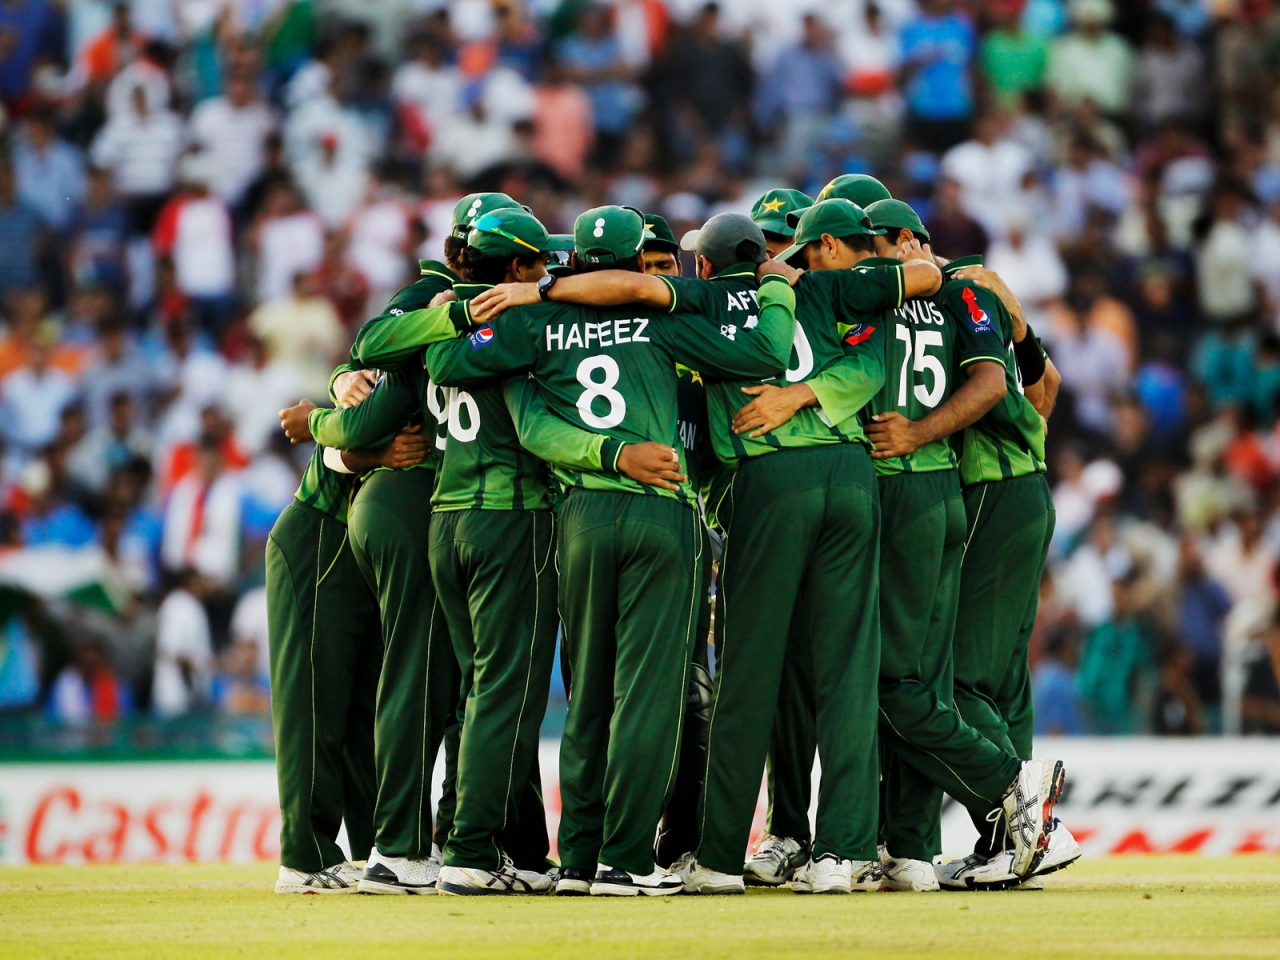 Pakistan Cricket Team for 1280 x 960 resolution